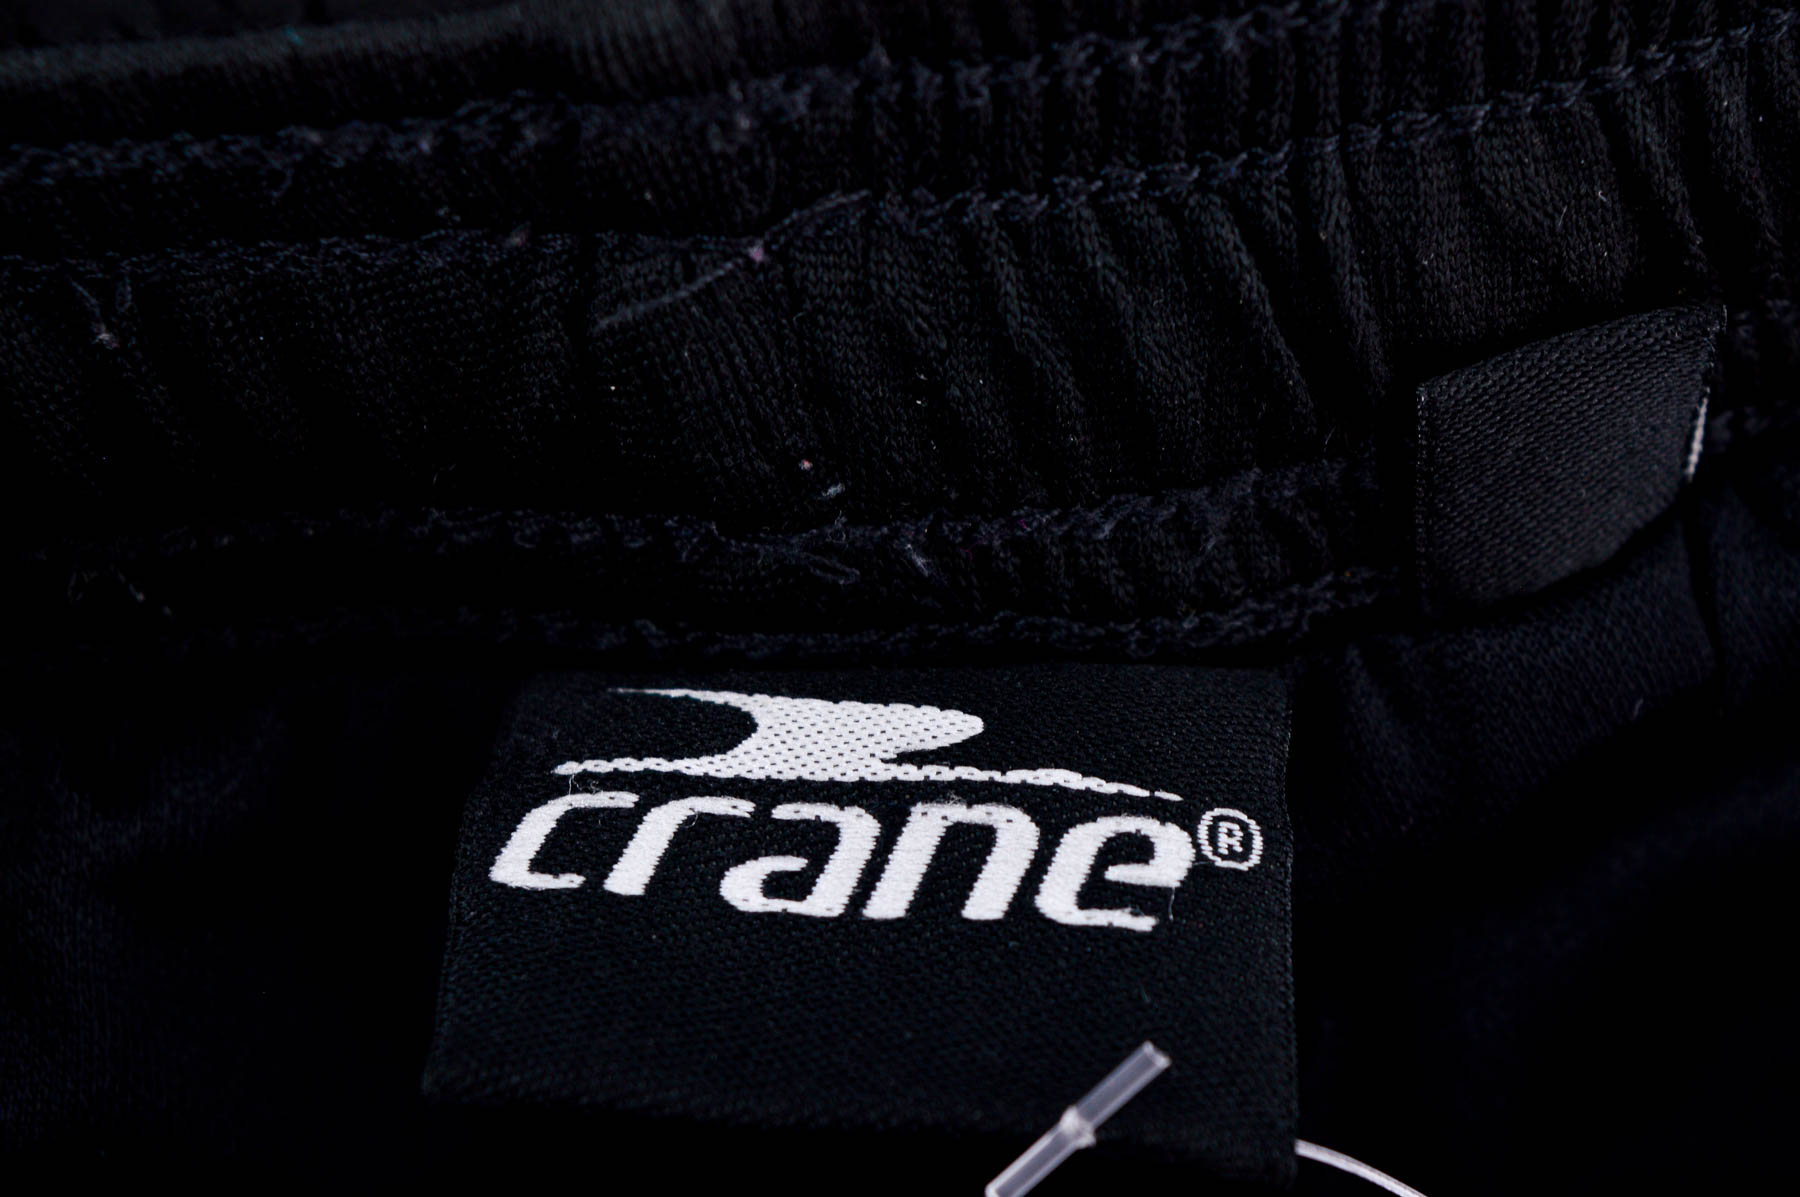 Women's shorts - Crane - 2